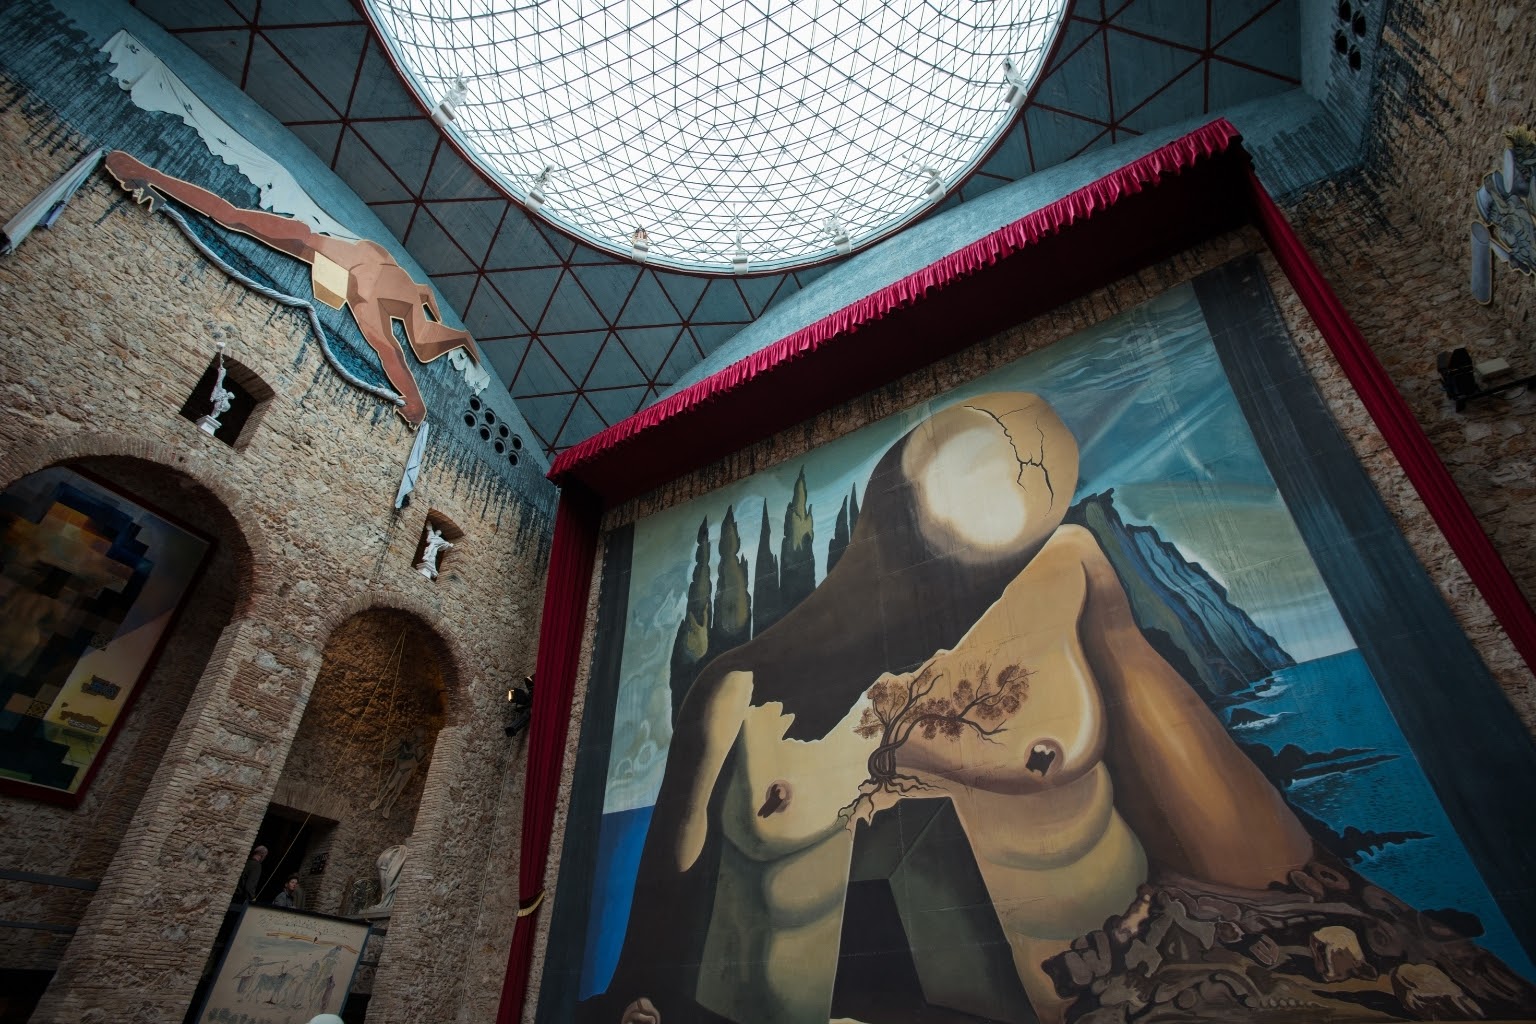 The Dali Museum interior